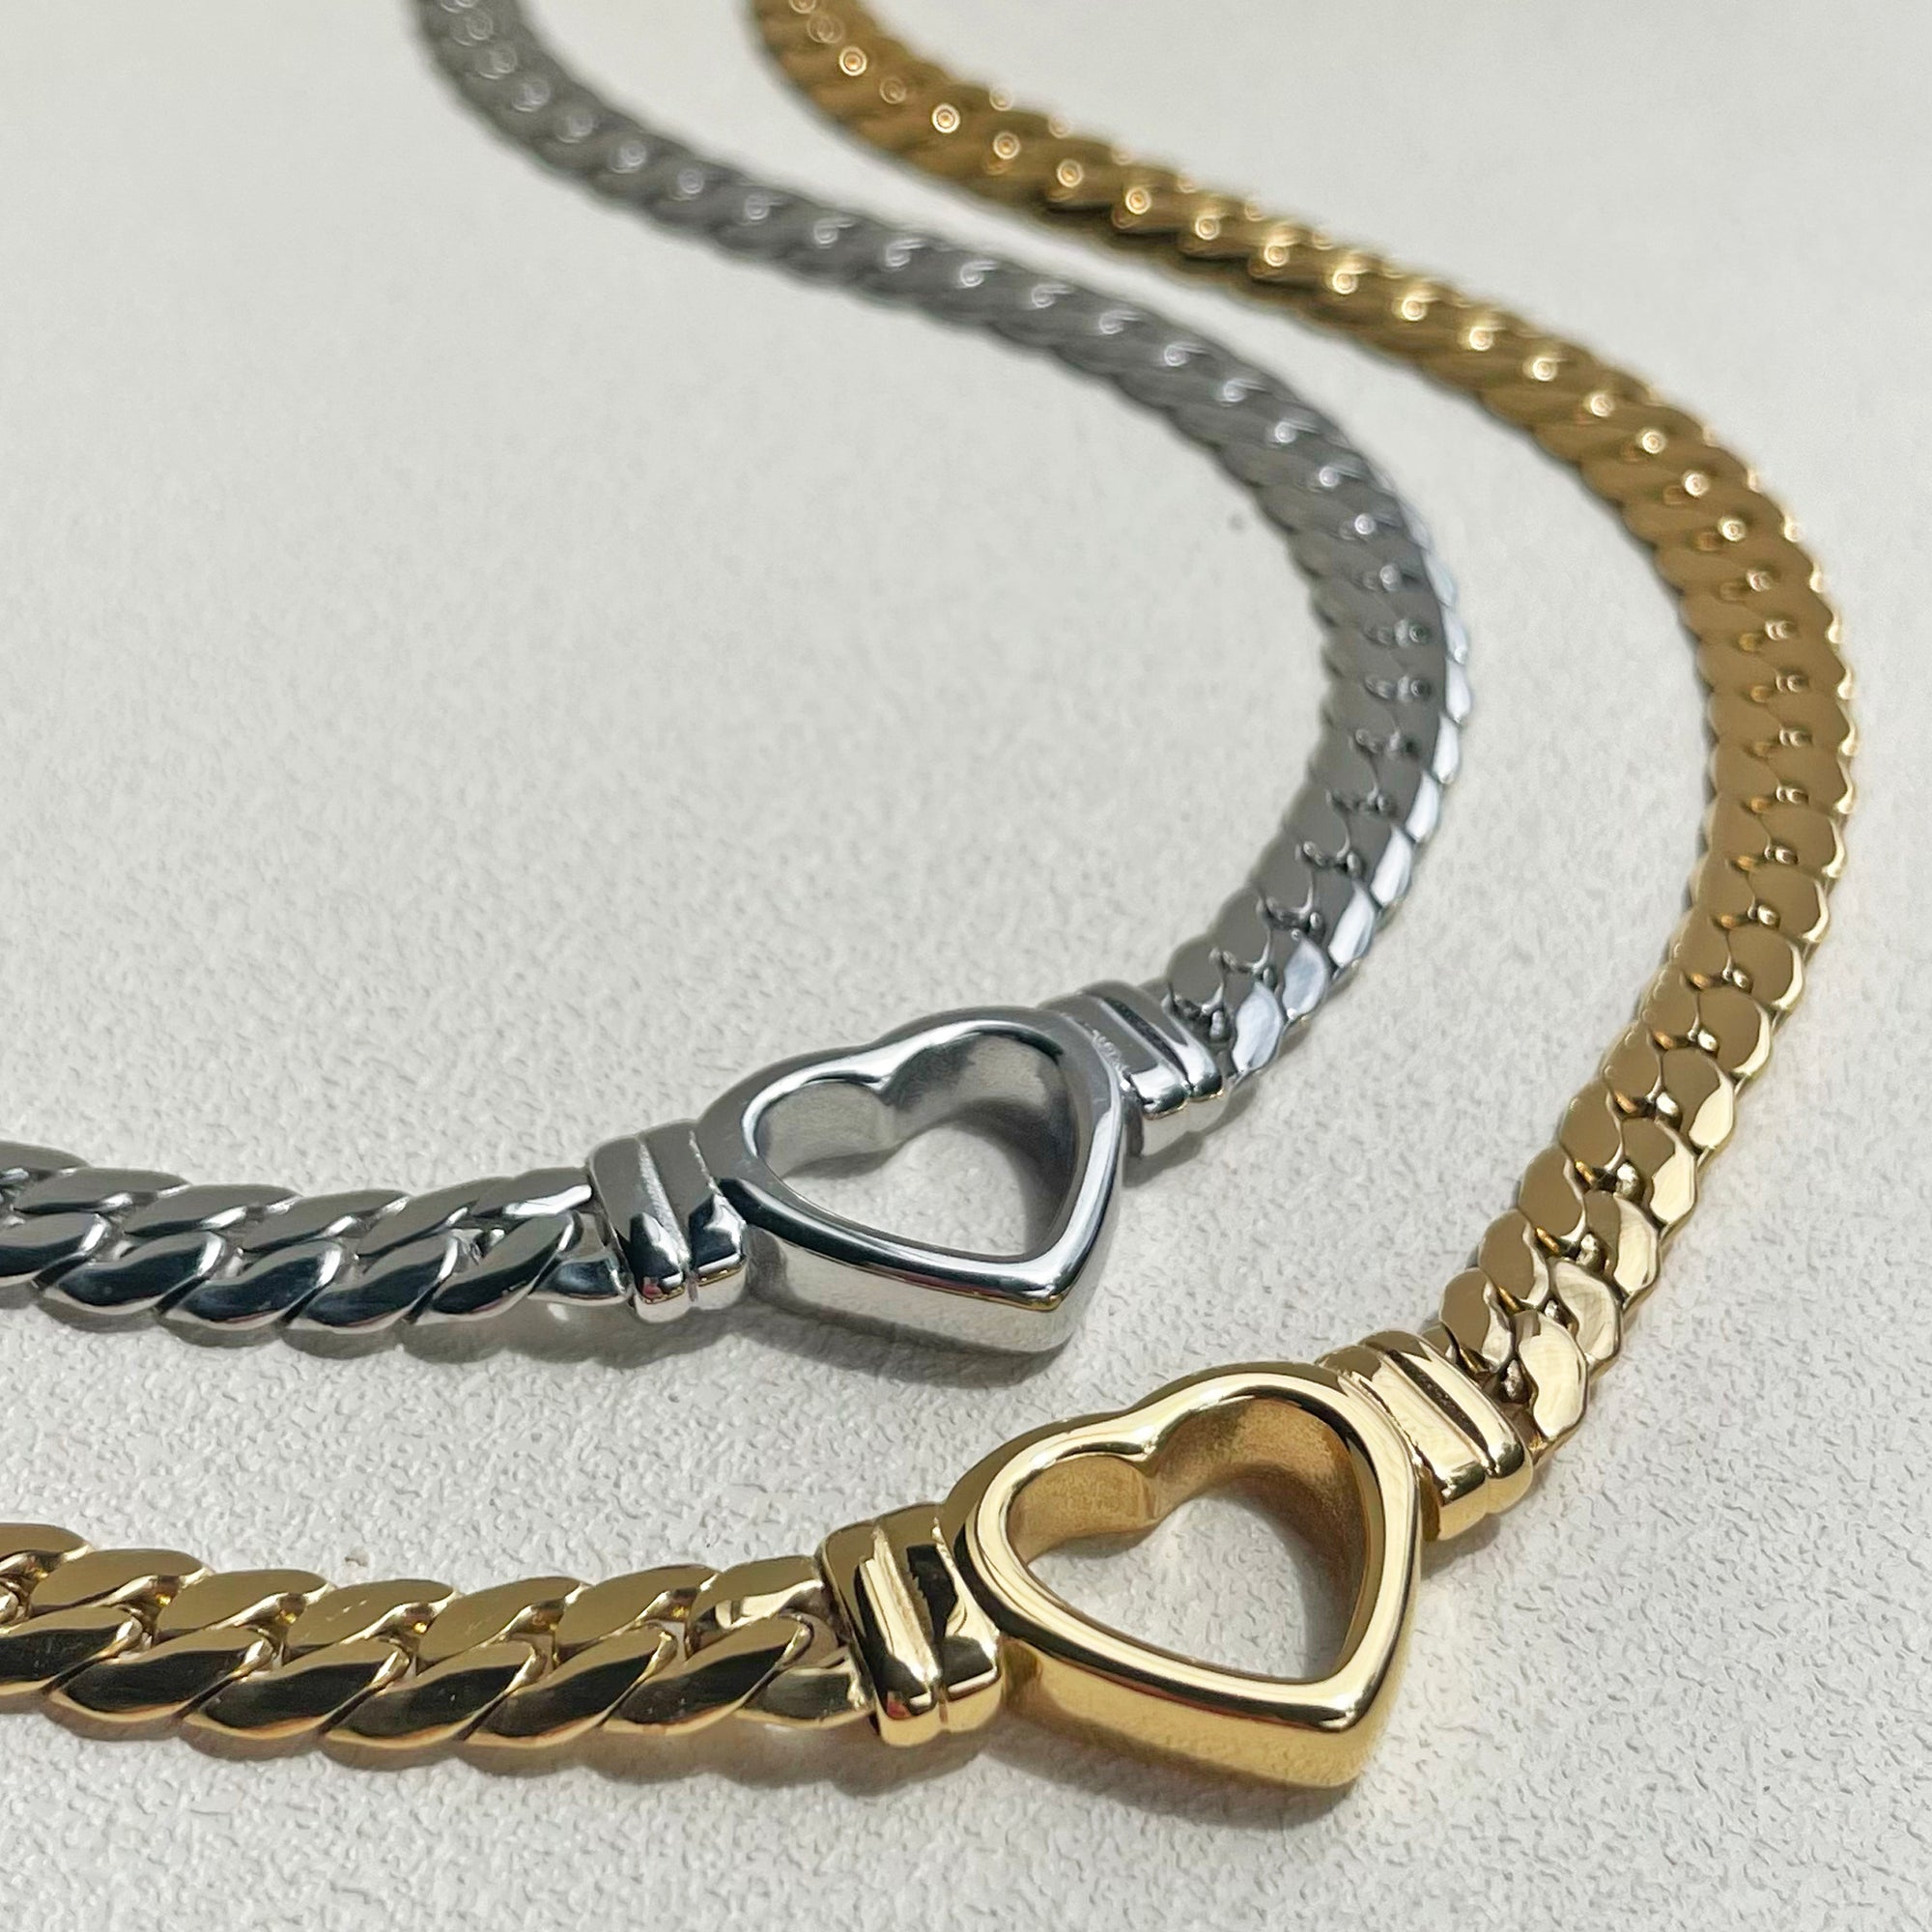 Valentine Heart Necklace - Silver